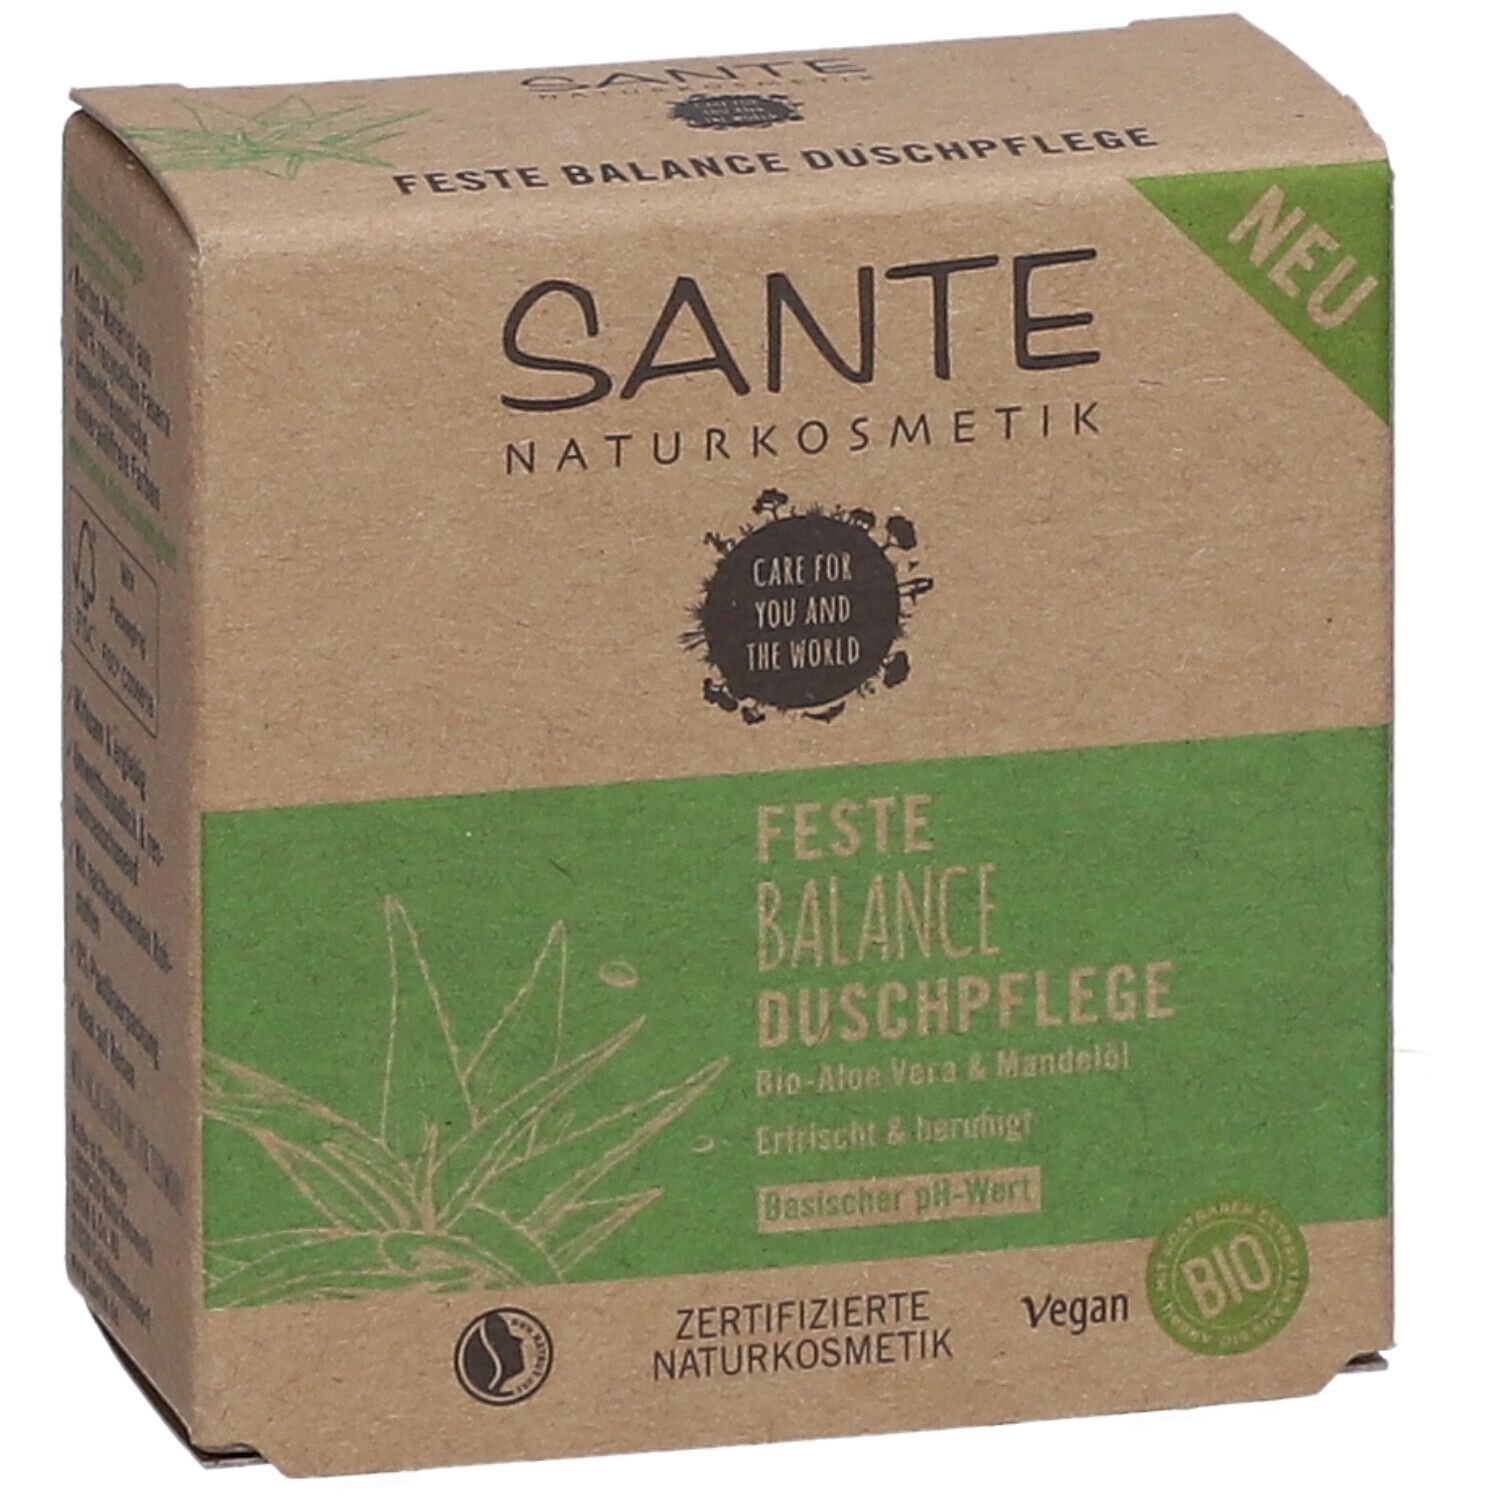 SANTE Feste Duschpflege Aloe Balance Bio APOTHEKE SHOP & Mandelöl - 80 Vera g